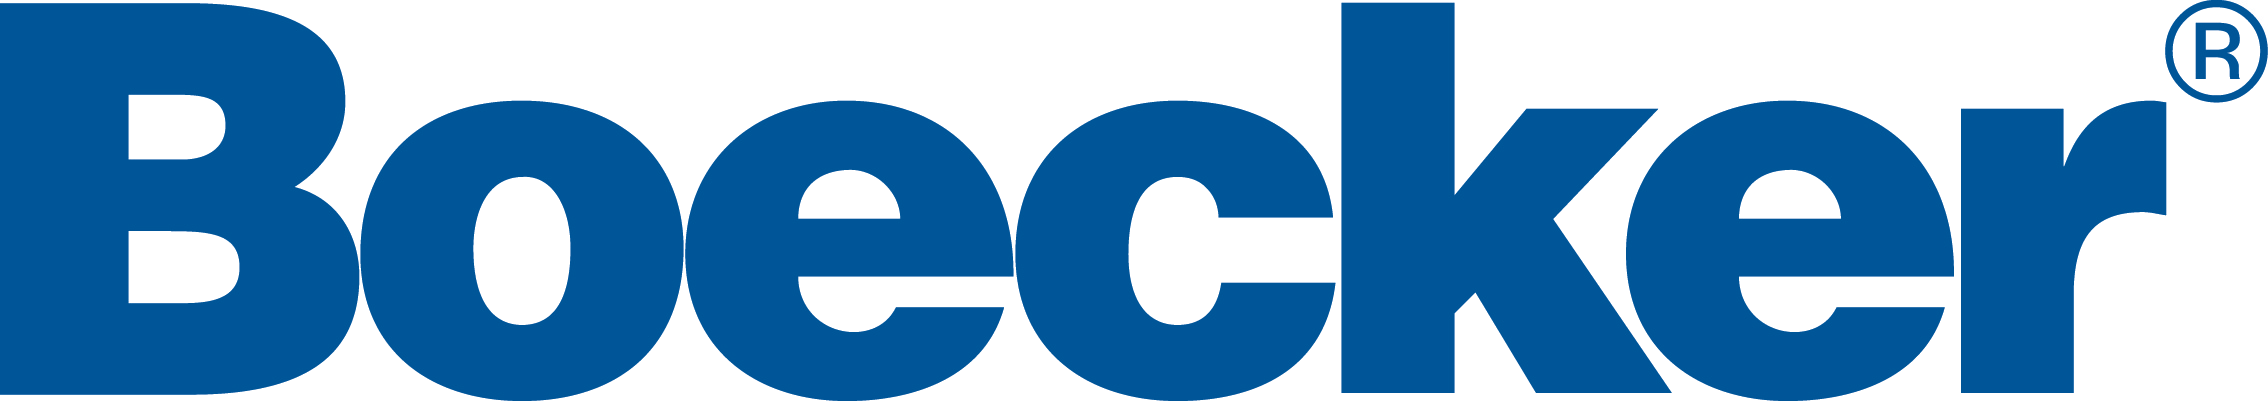 Boecker Logo English